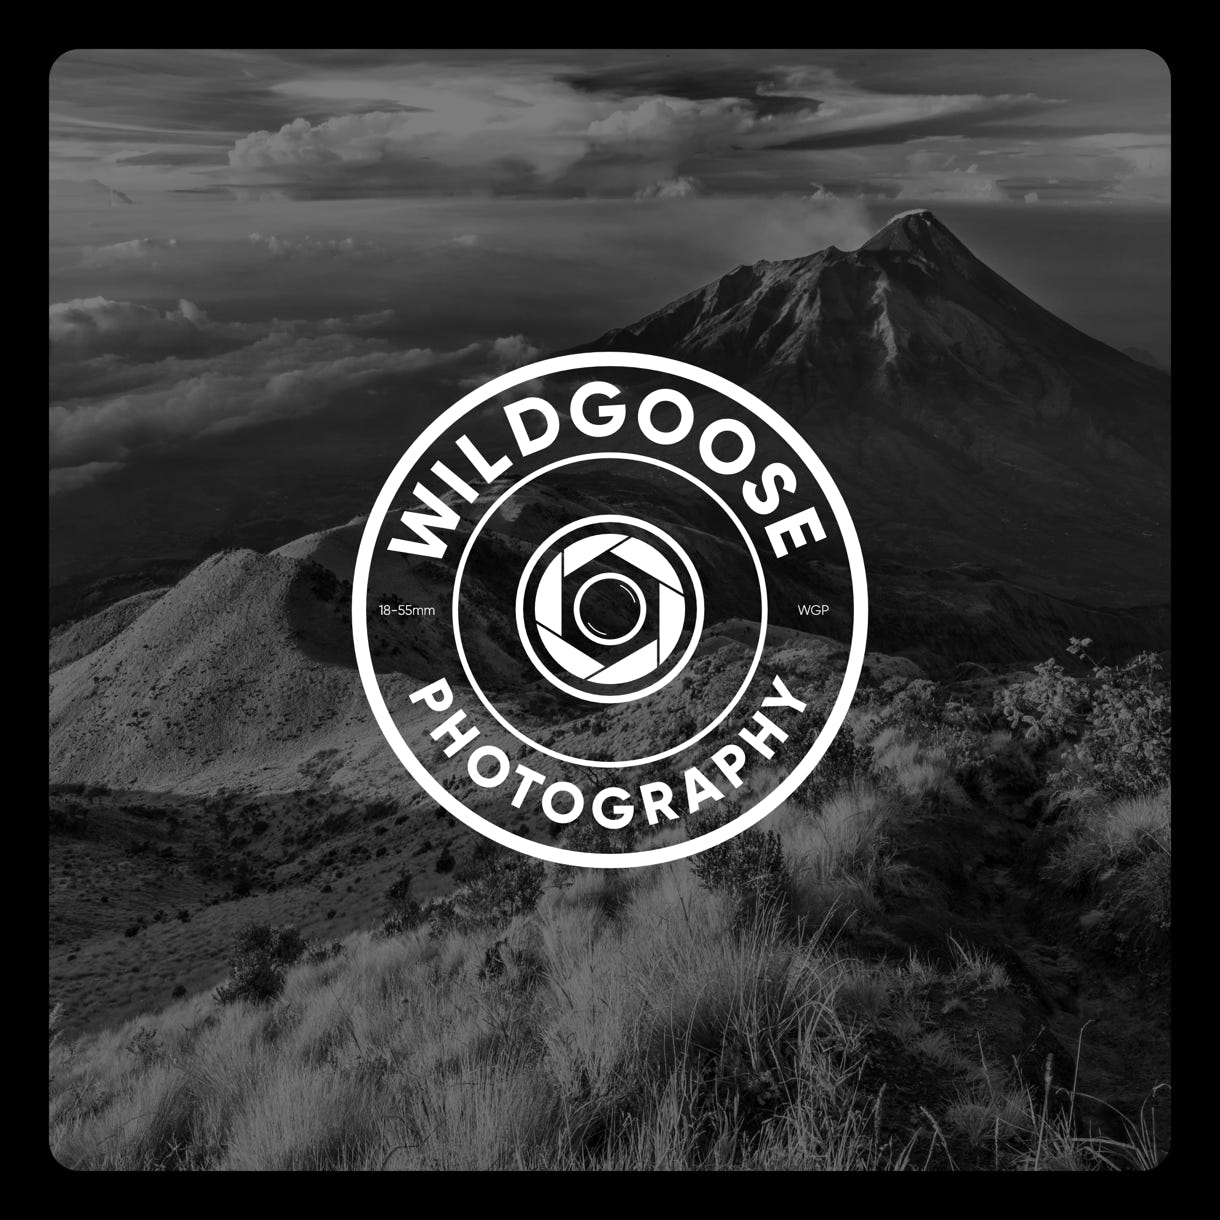 Wildgoose Photgraphy - Logo Design with Background